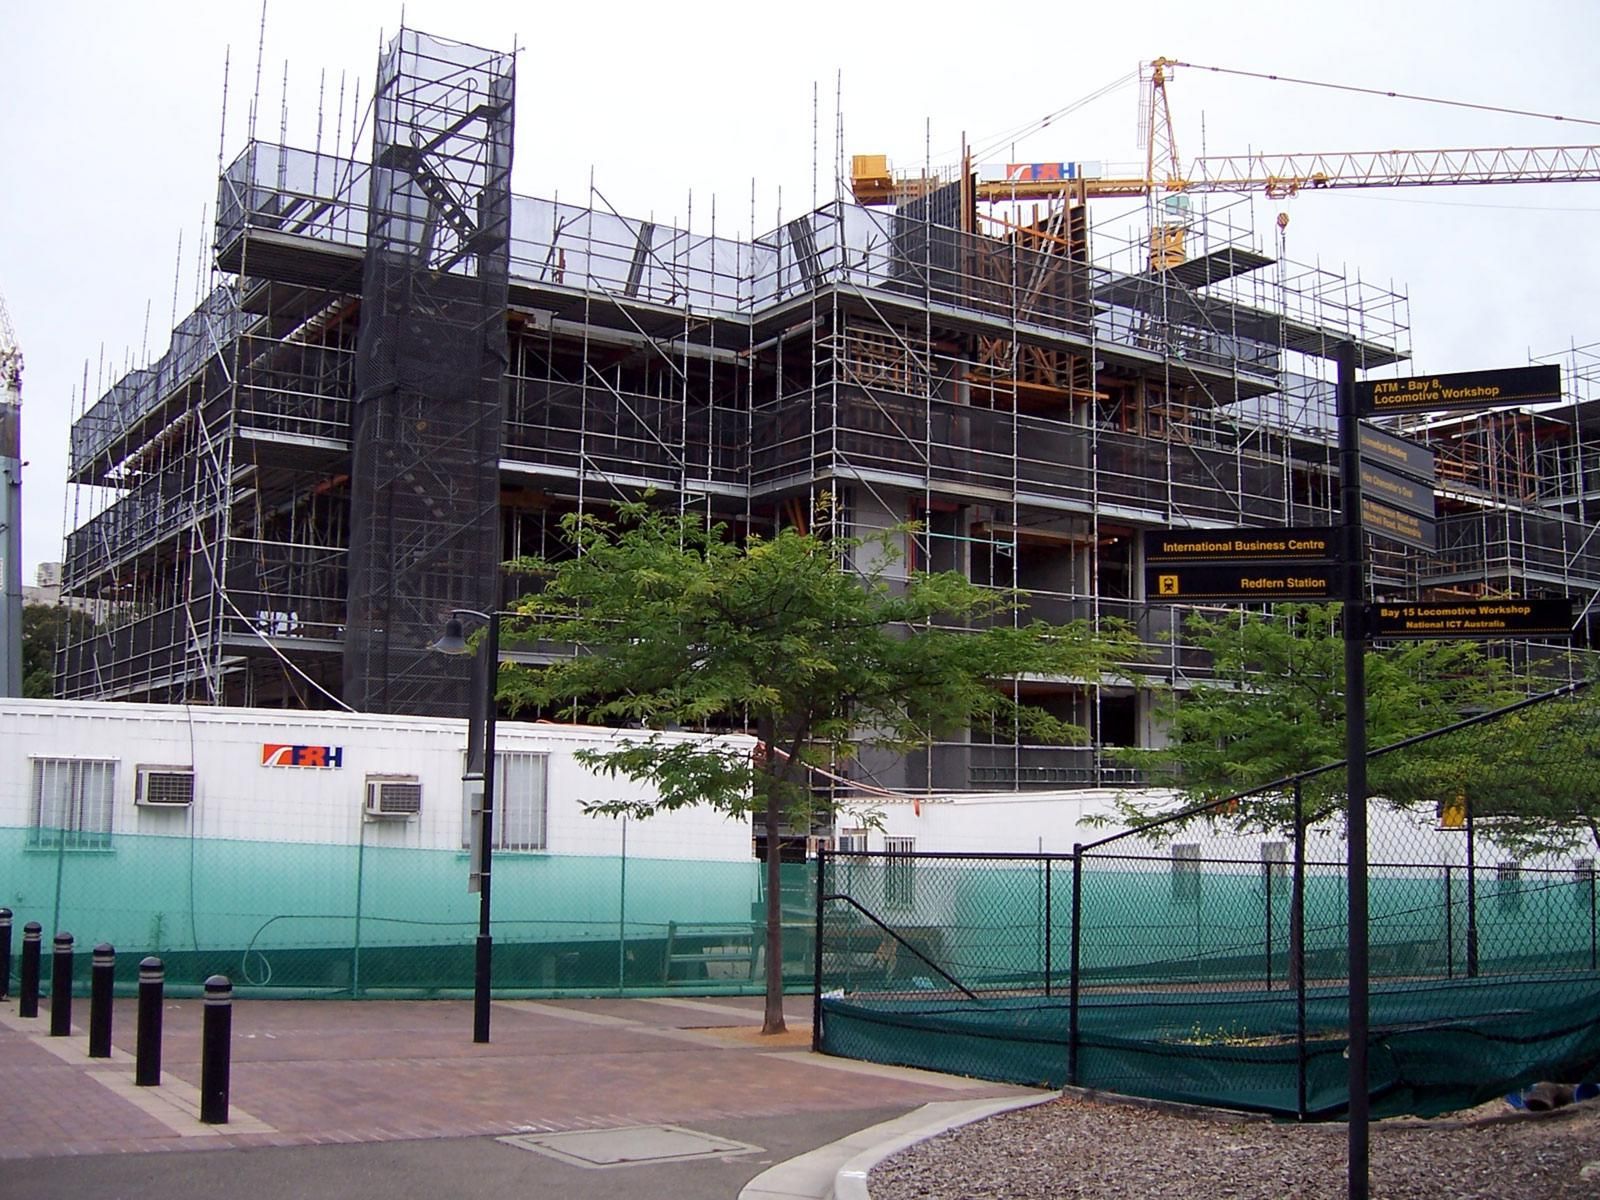 Australia’s construction activity continues to decline